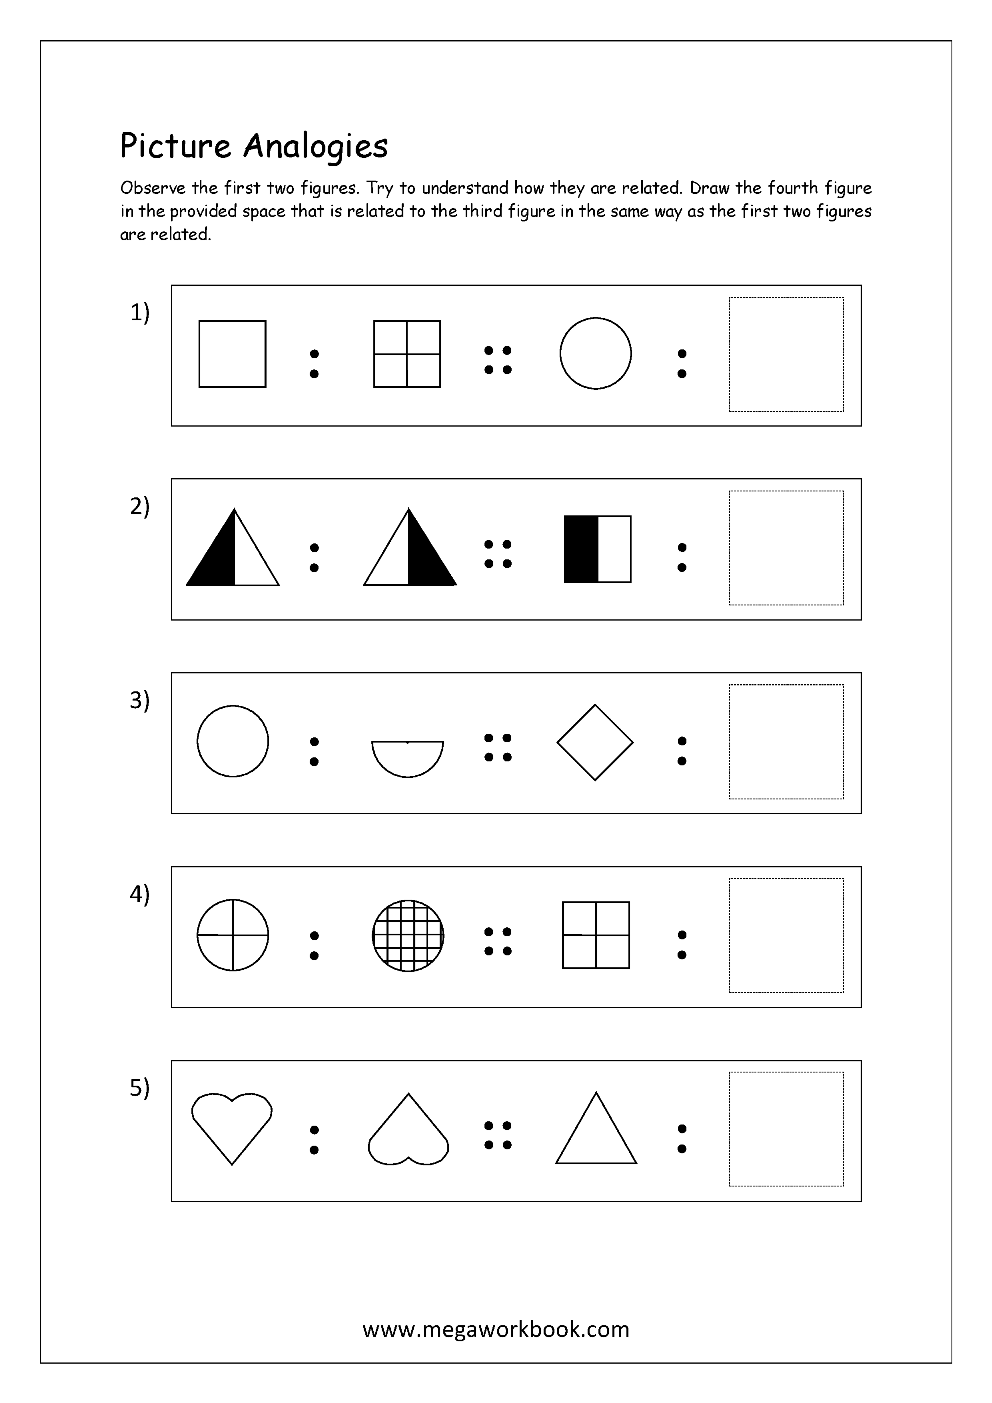 free-printable-picture-analogy-worksheets-logical-reasoning-megaworkbook